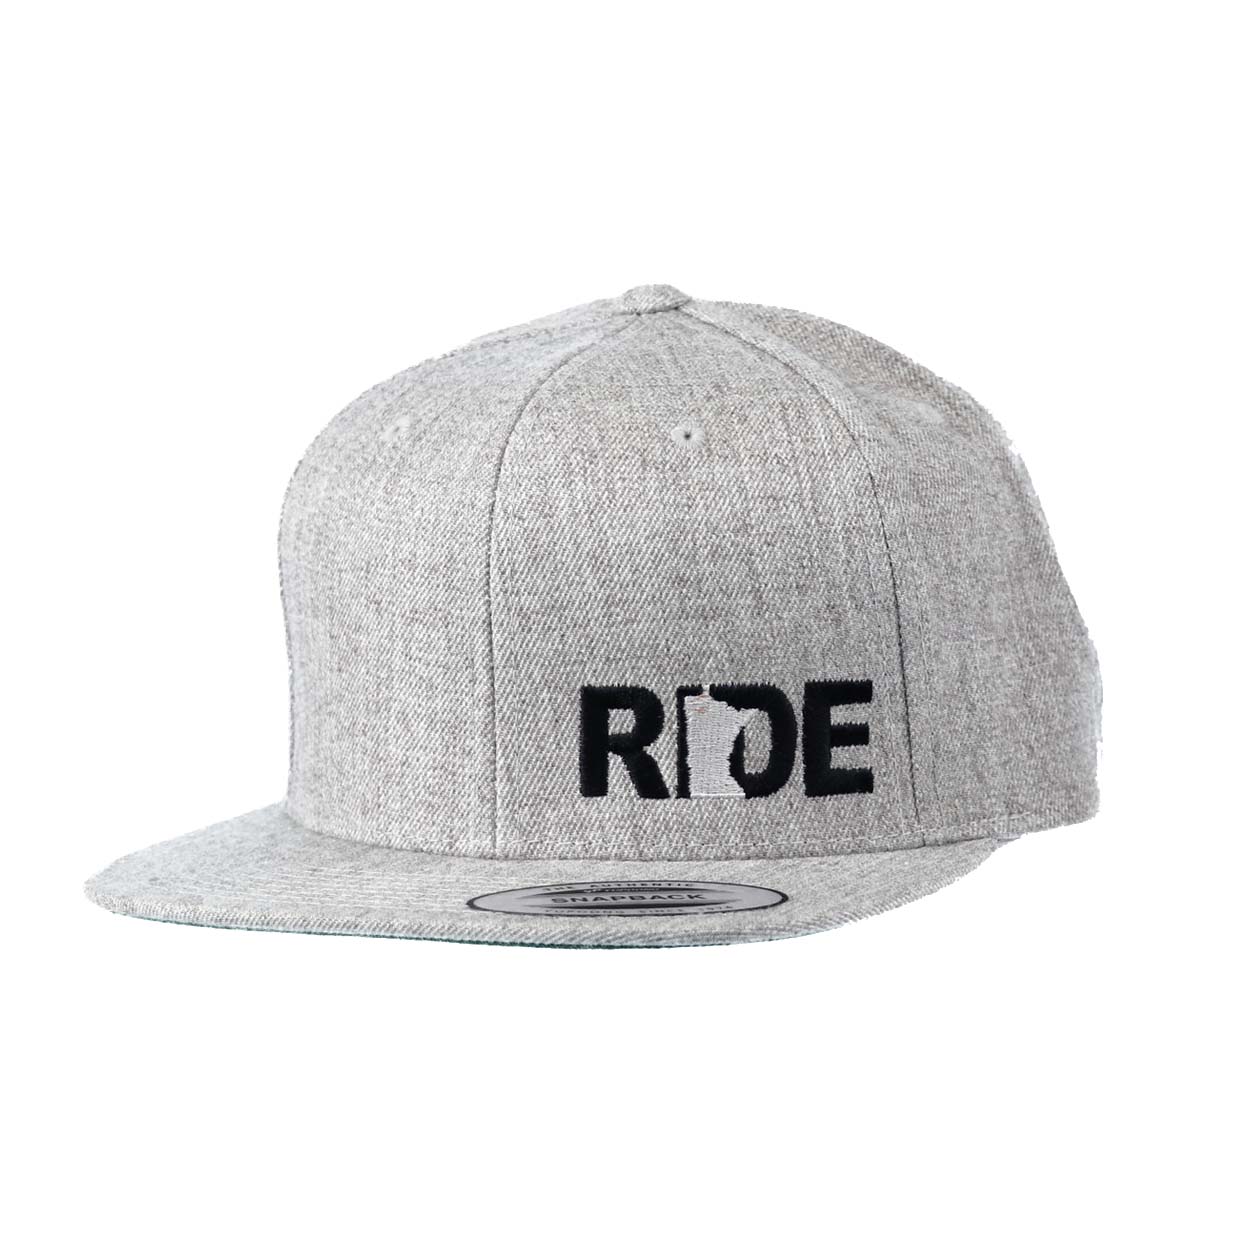 Ride Minnesota Night Out Embroidered Snapback Flat Brim Hat Gray